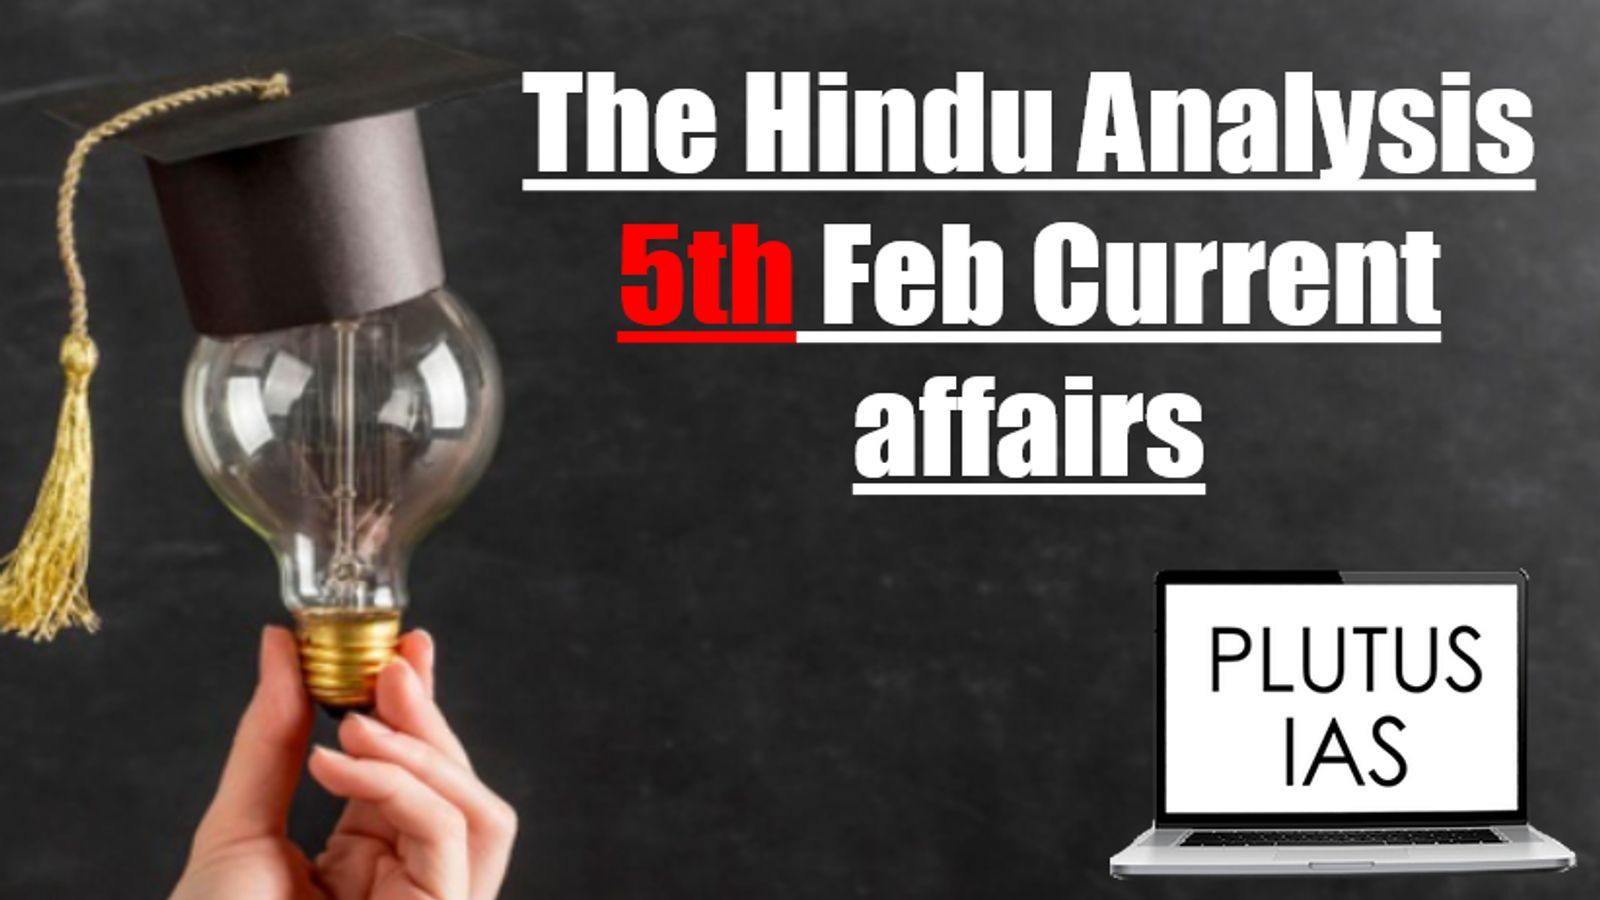 The Hindu Analysis 5th February